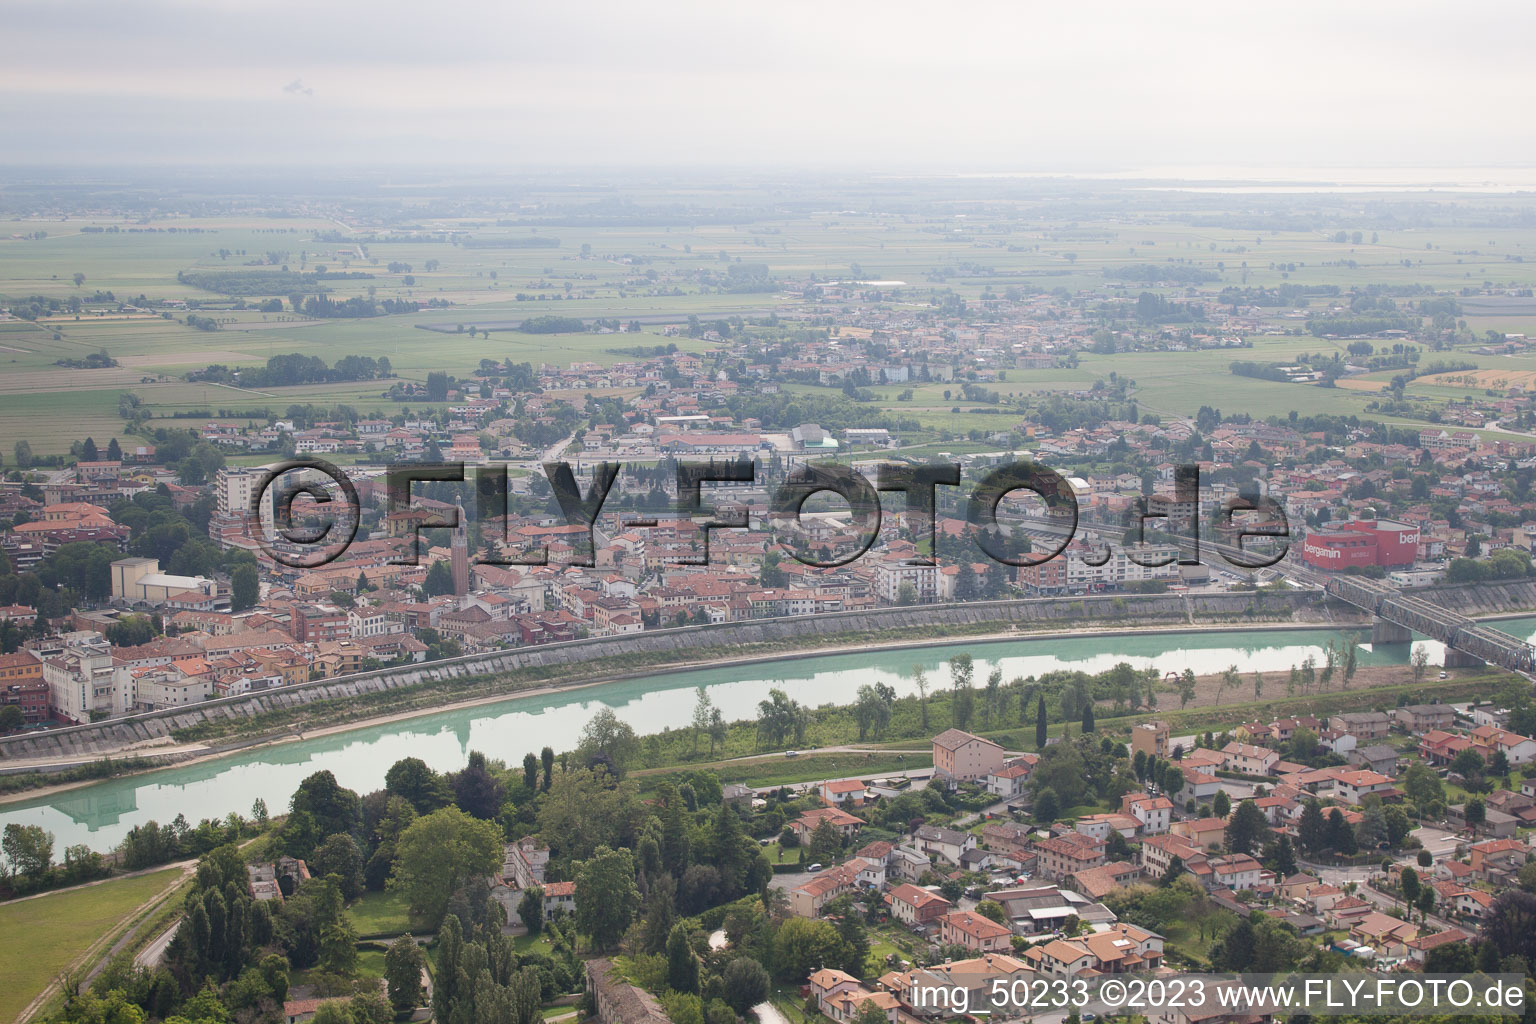 Aerial view of Latisana in the state Friuli Venezia Giulia, Italy